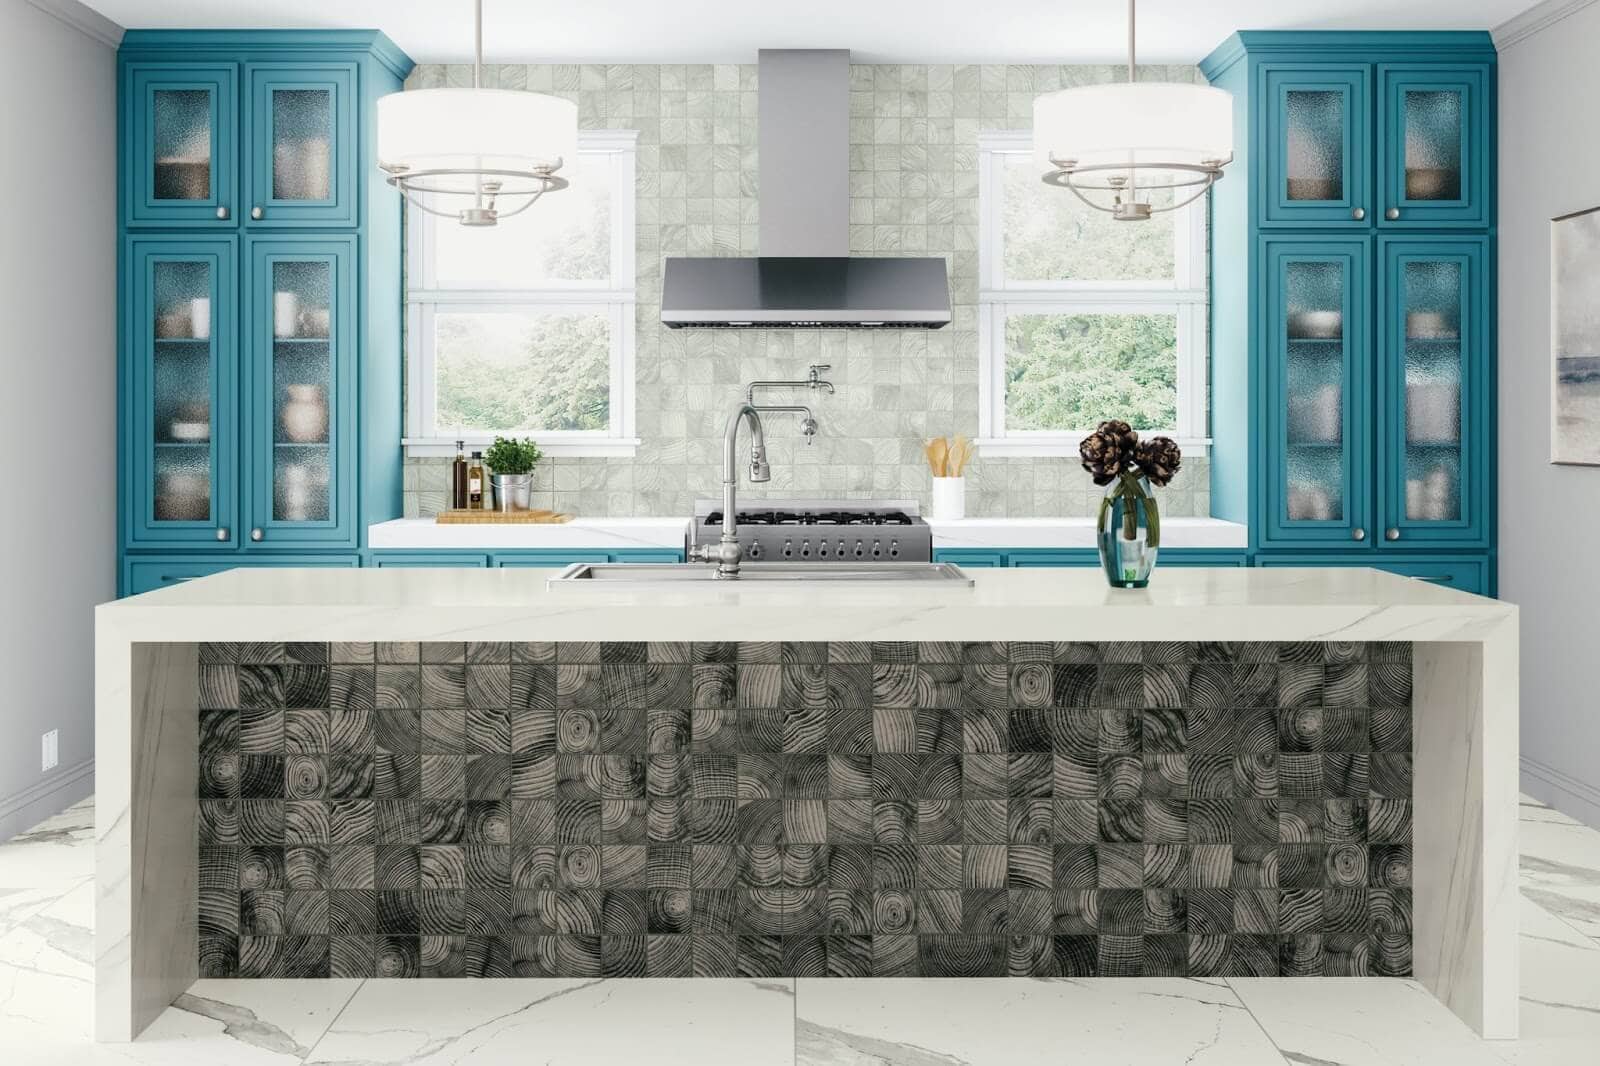 Kitchen island covered in ceramic tile